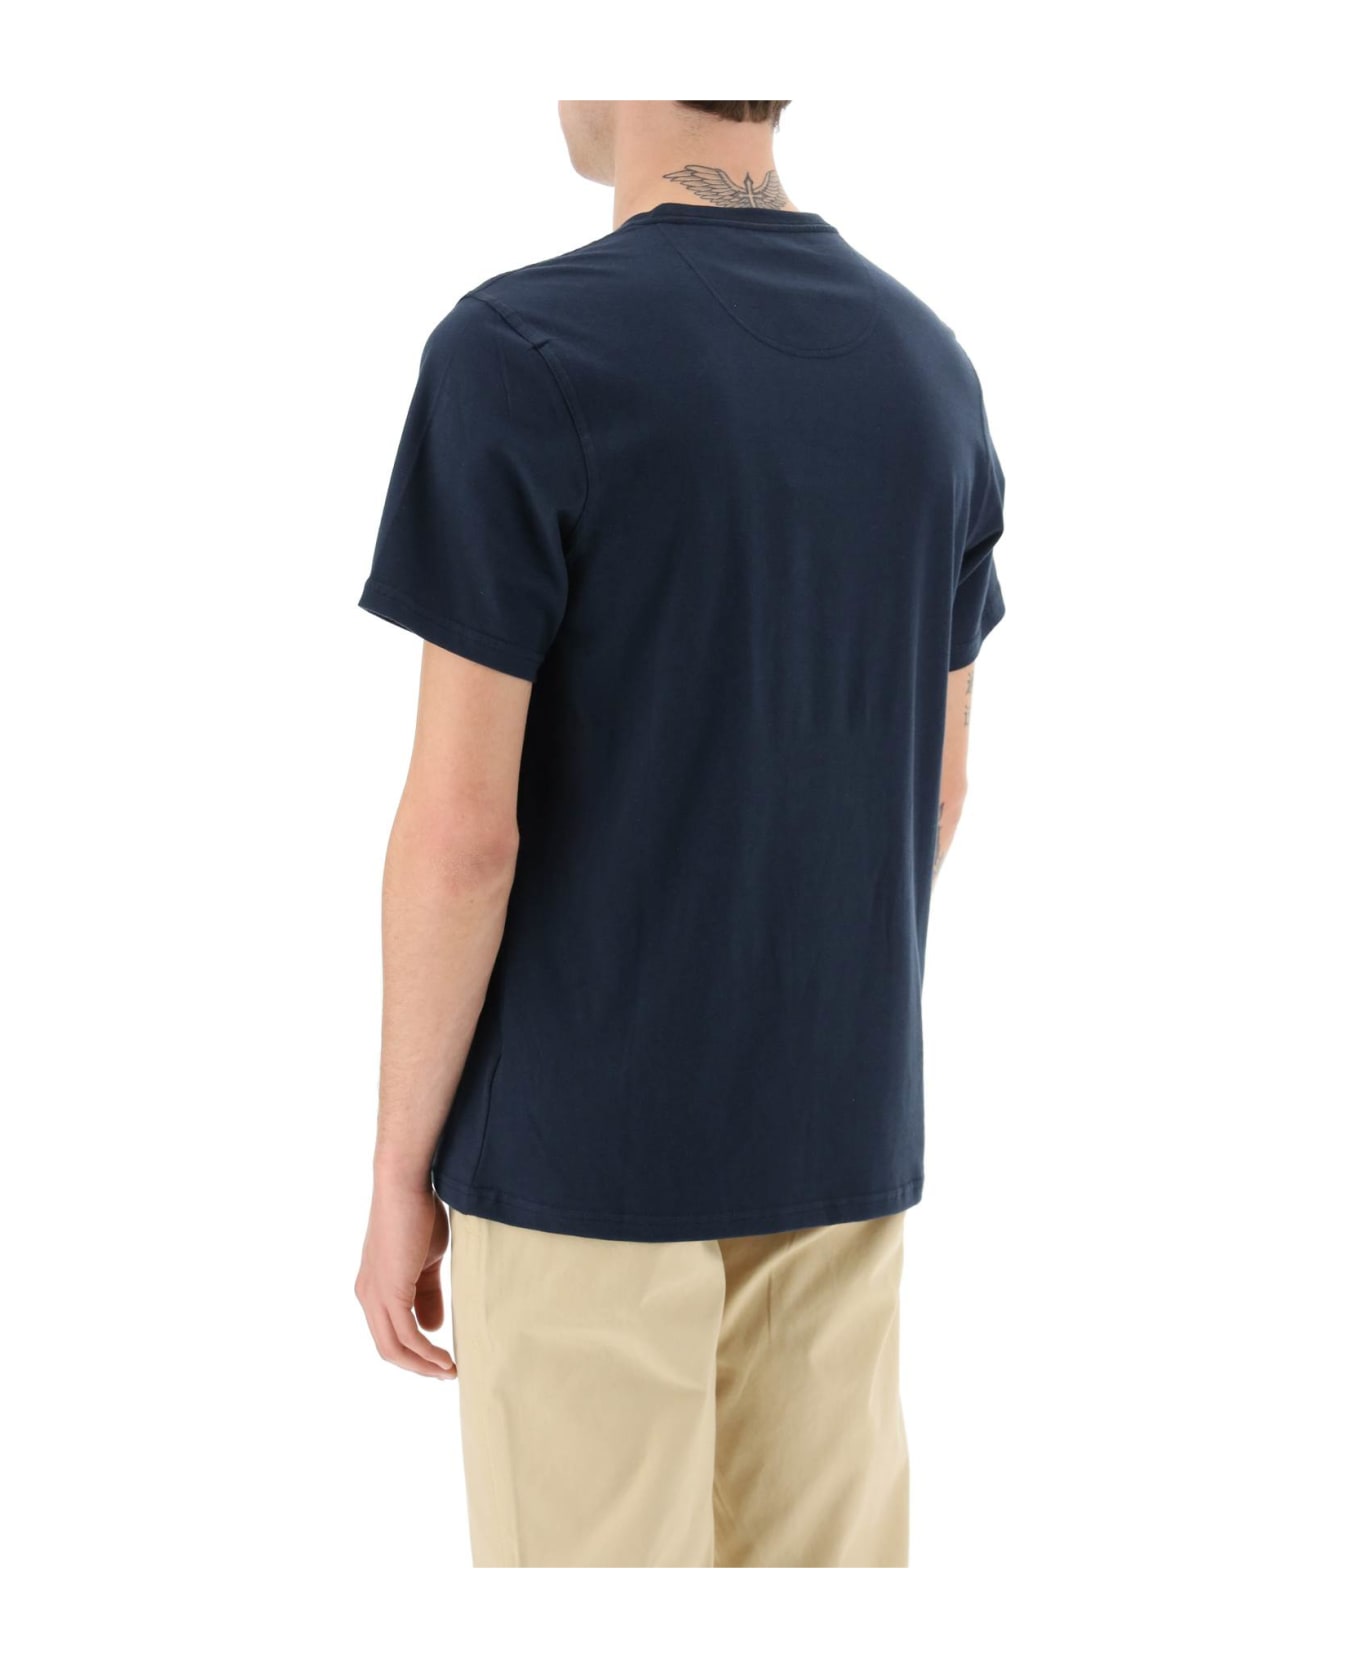 Barbour Classic Chest Pocket T-shirt - NAVY (Blue)